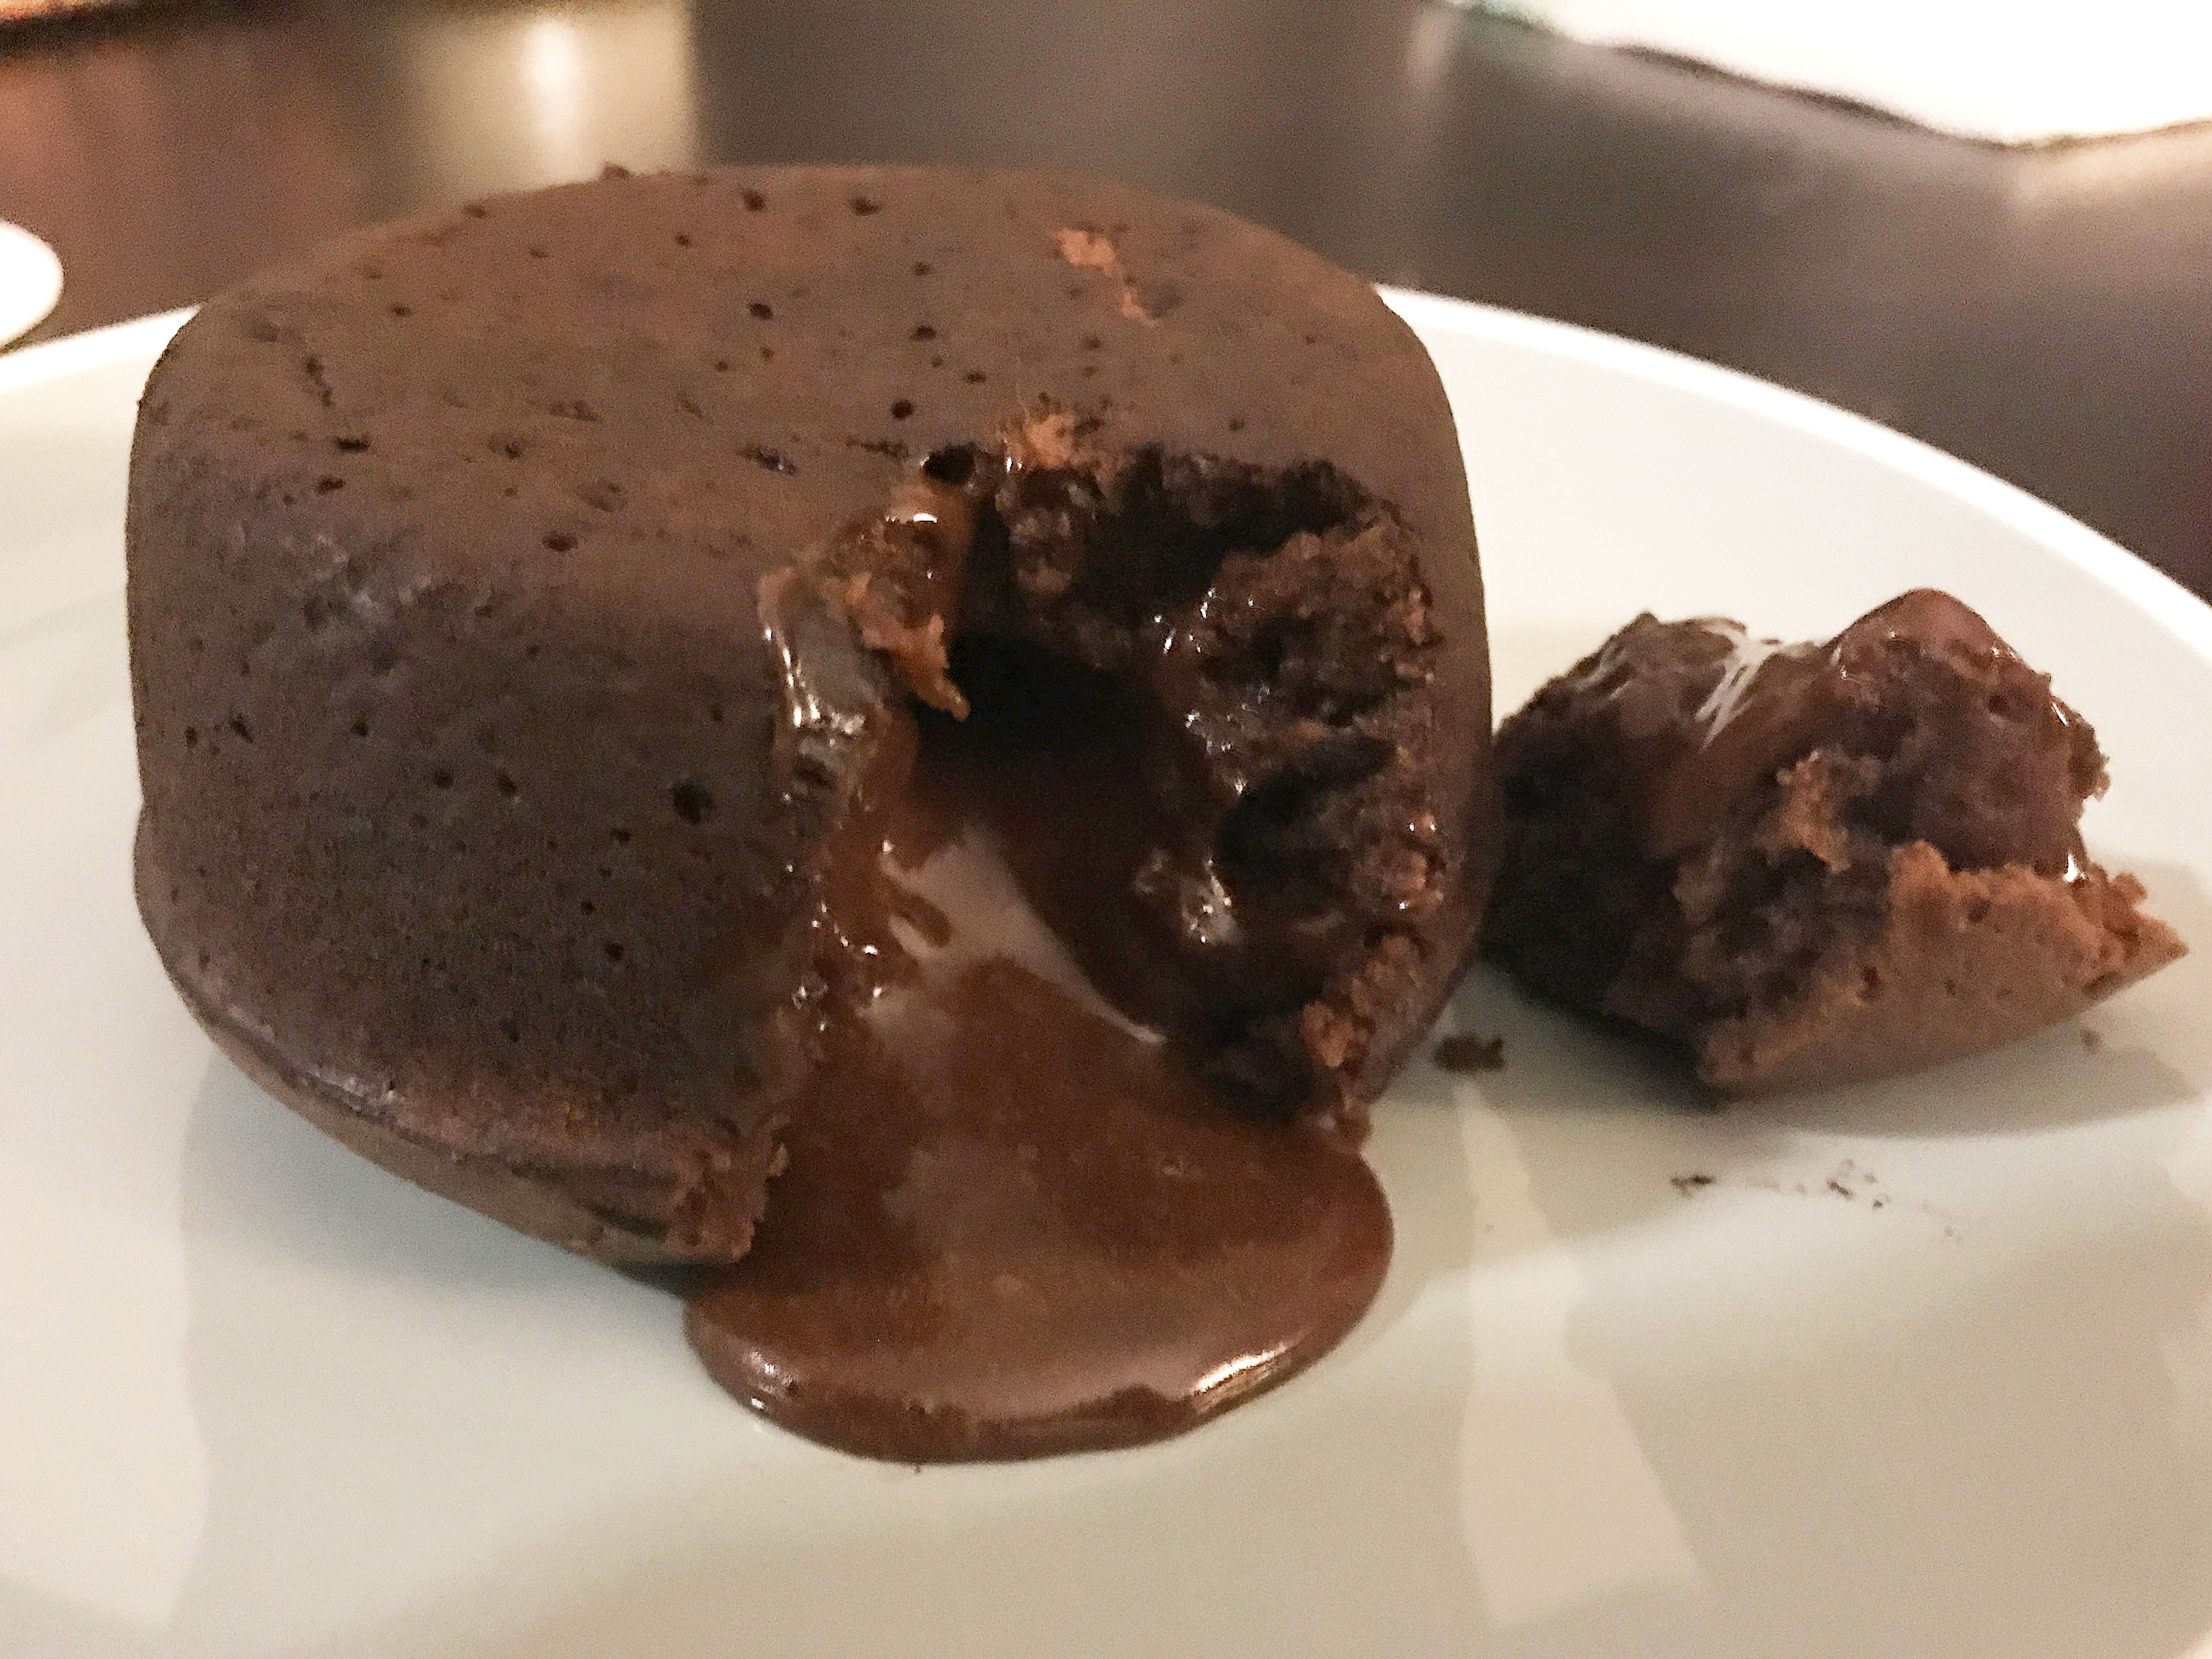 Chocolate Fondant / Molten Lava Cake